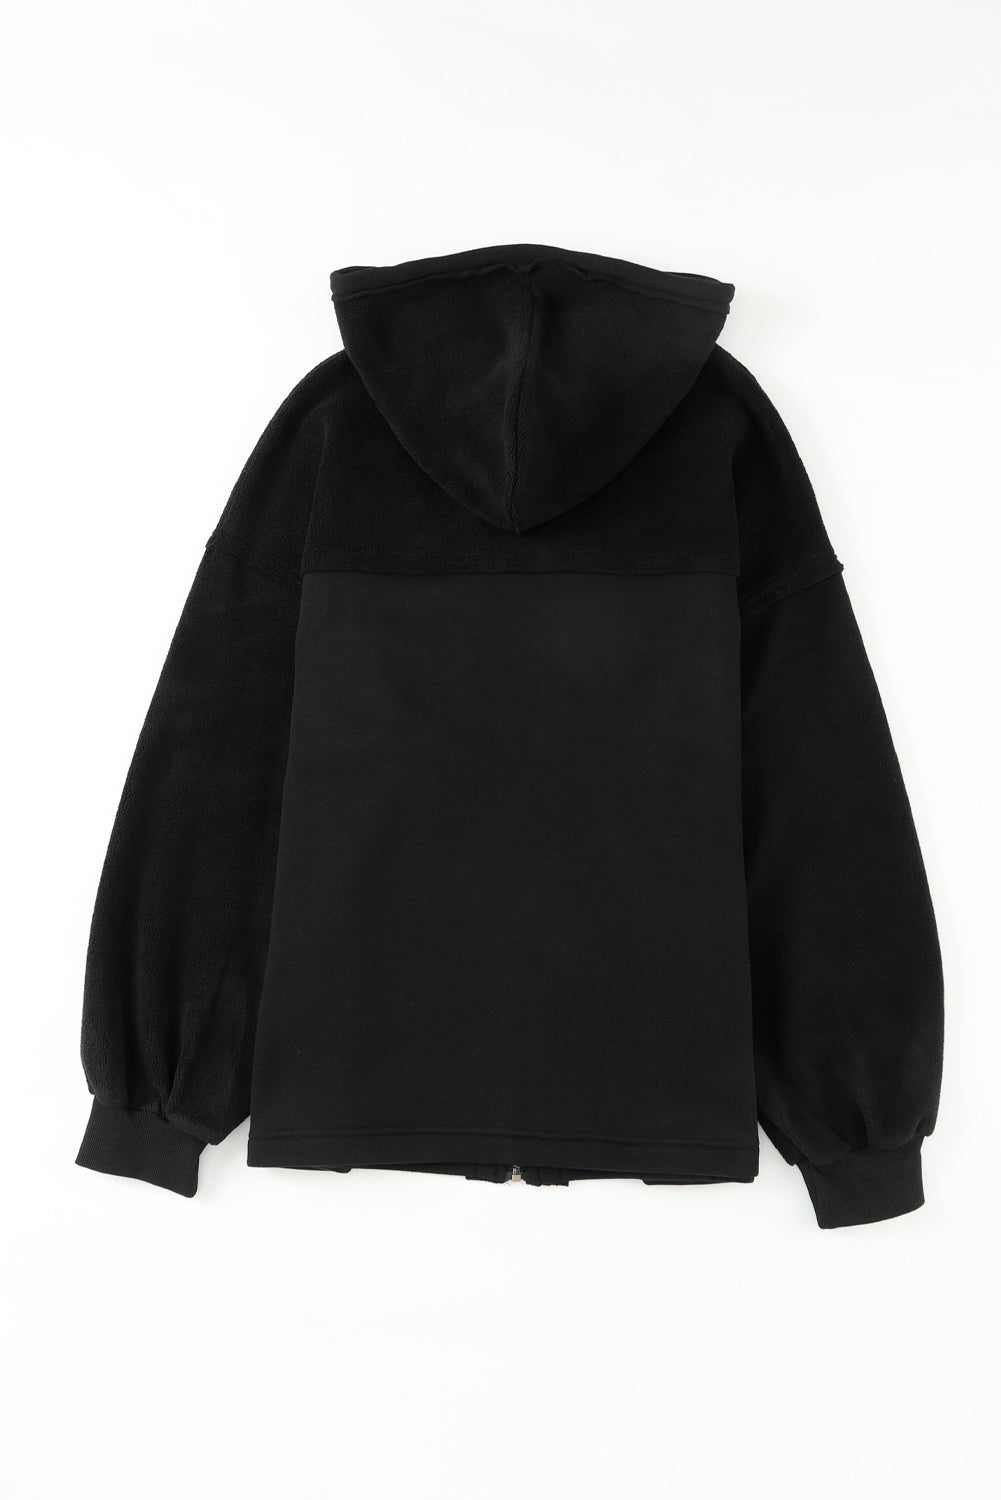 Black Flap Pocket Drawstring Hood Zip Up Jacket